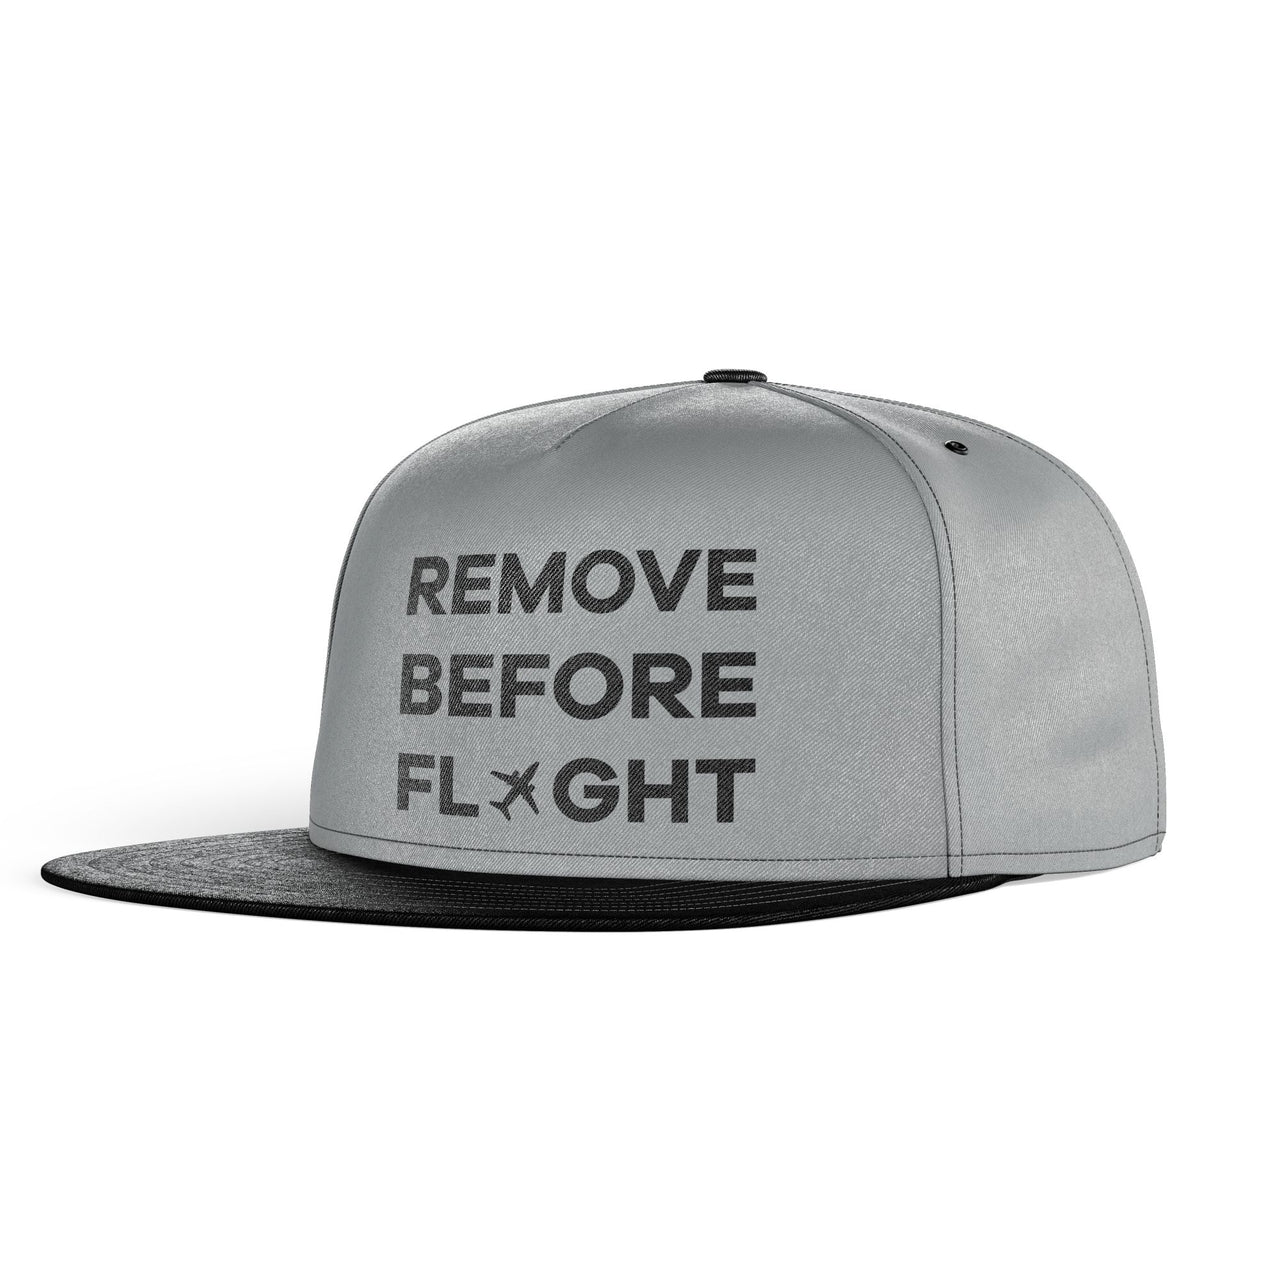 Remove Before Flight Designed Snapback Caps & Hats